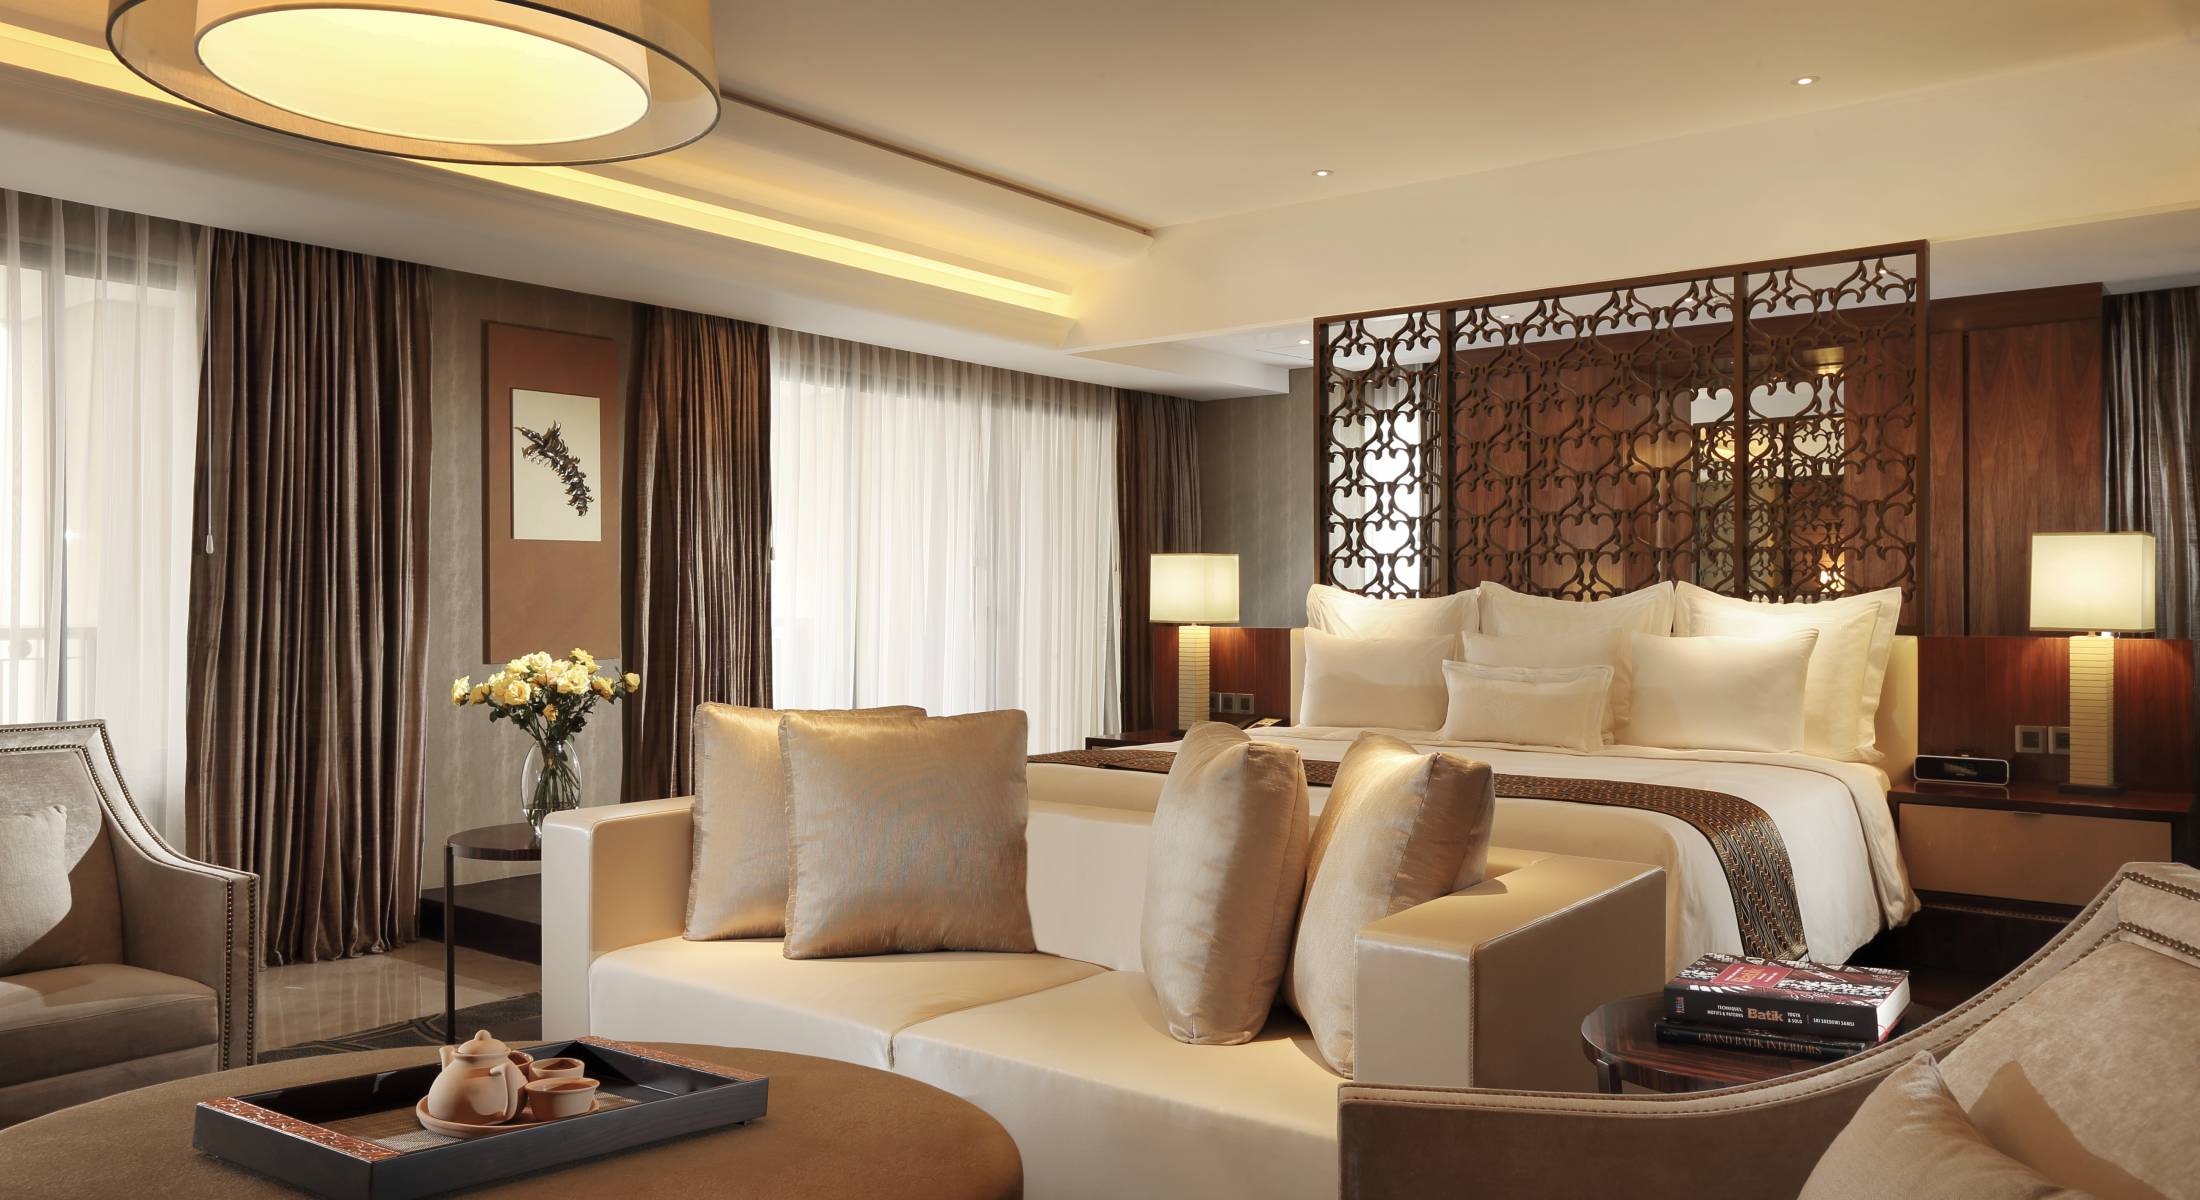 Rooms - Executive Suite Yogyakarta Hotel - Hotel Tentrem ...